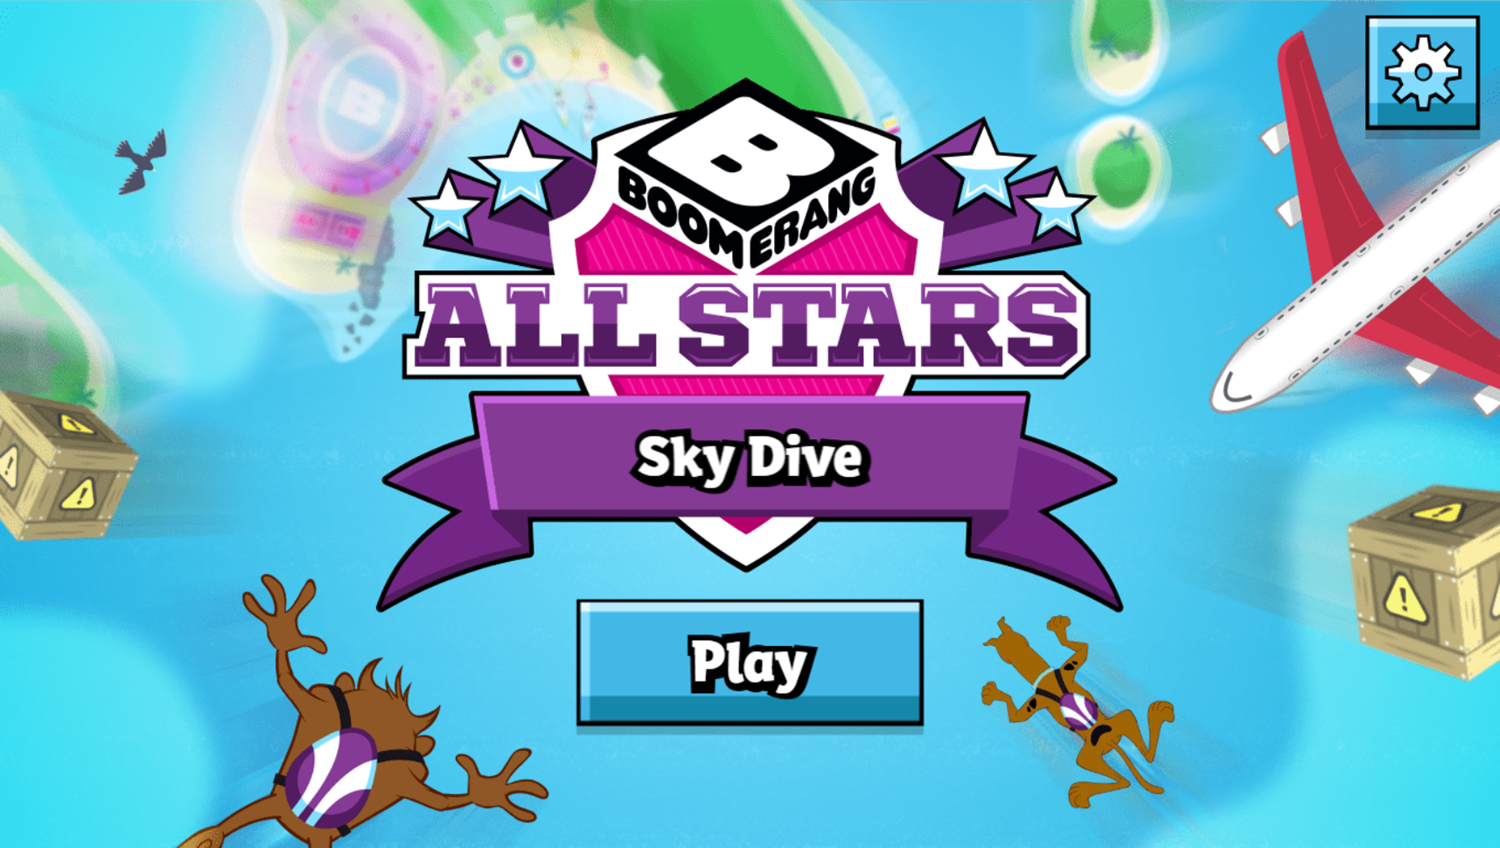 Sky Dive Game Welcome Screen Screenshot.